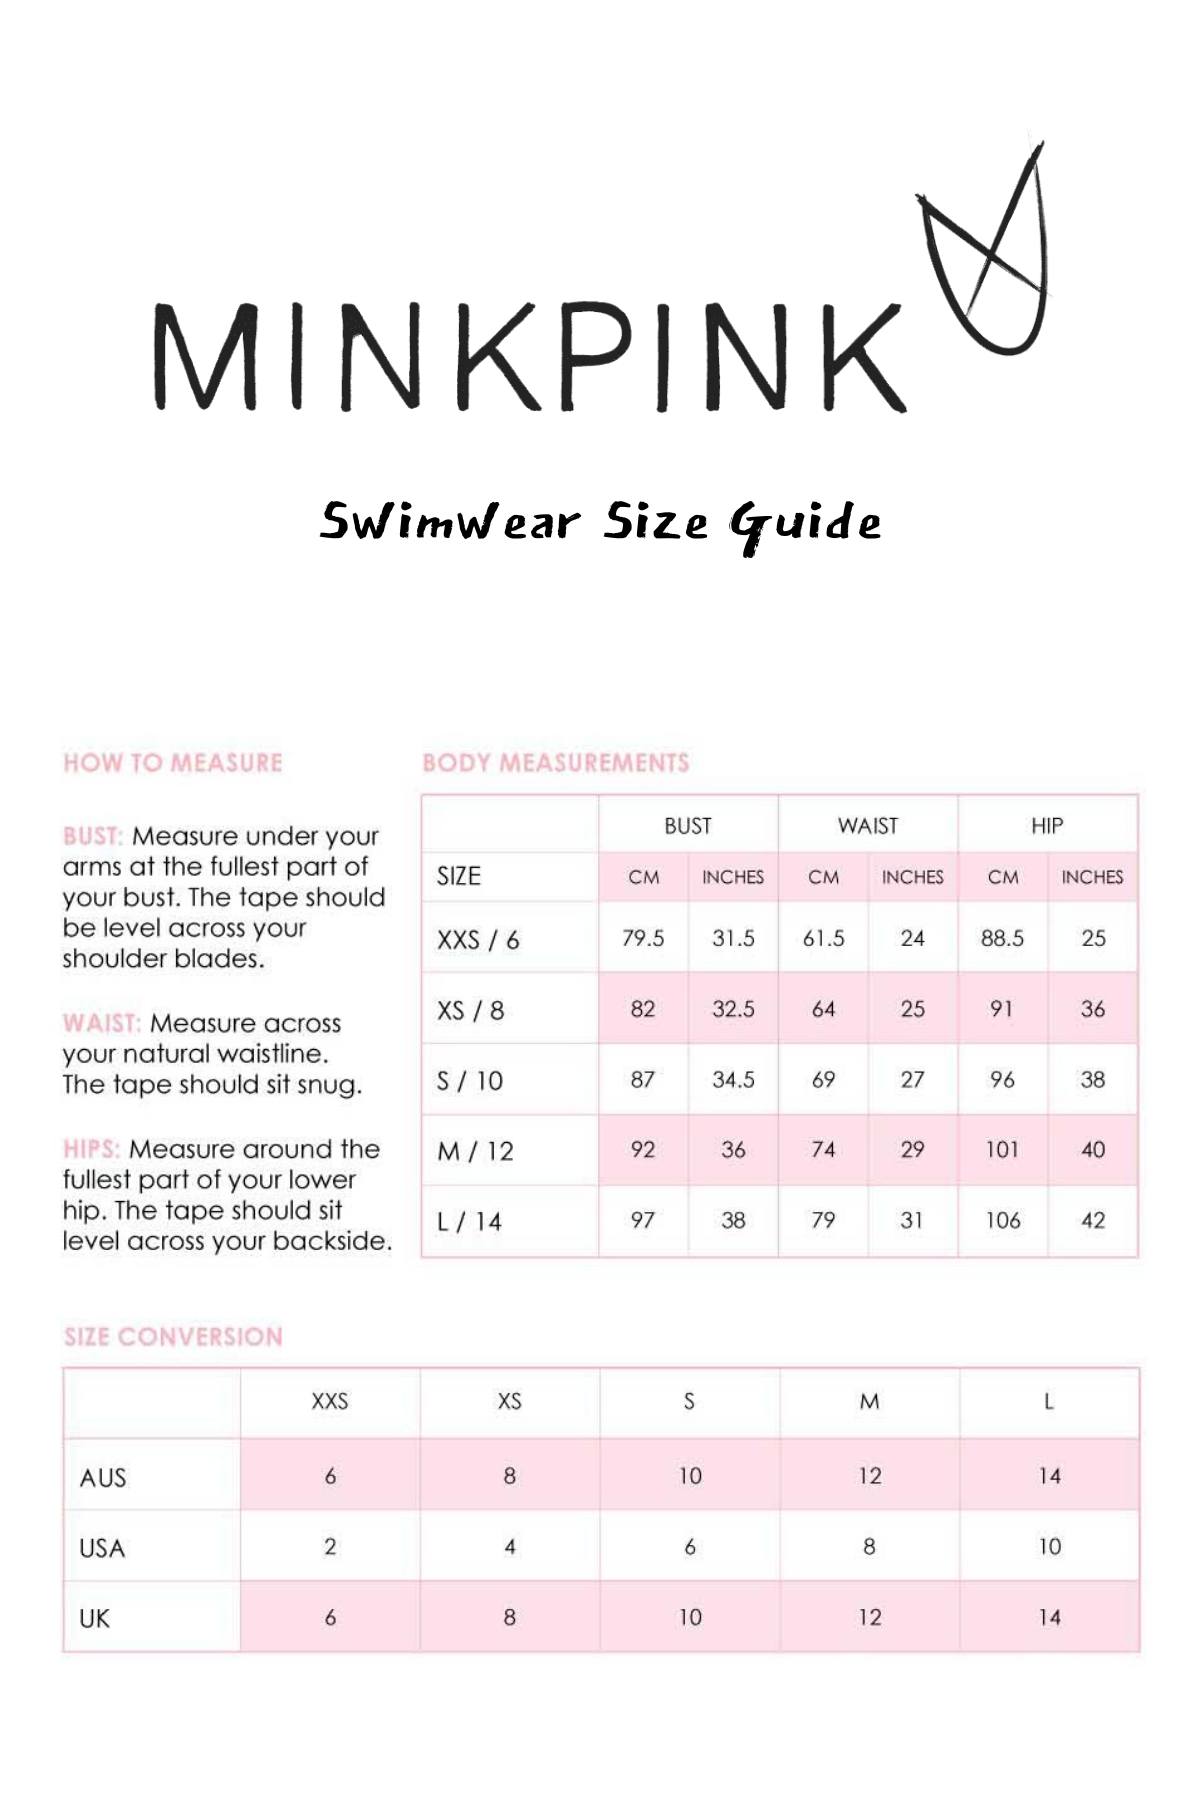 MINKPINK Summer Meadow Tie Bandeau Convertible Bikini Top in Floral Multicolor